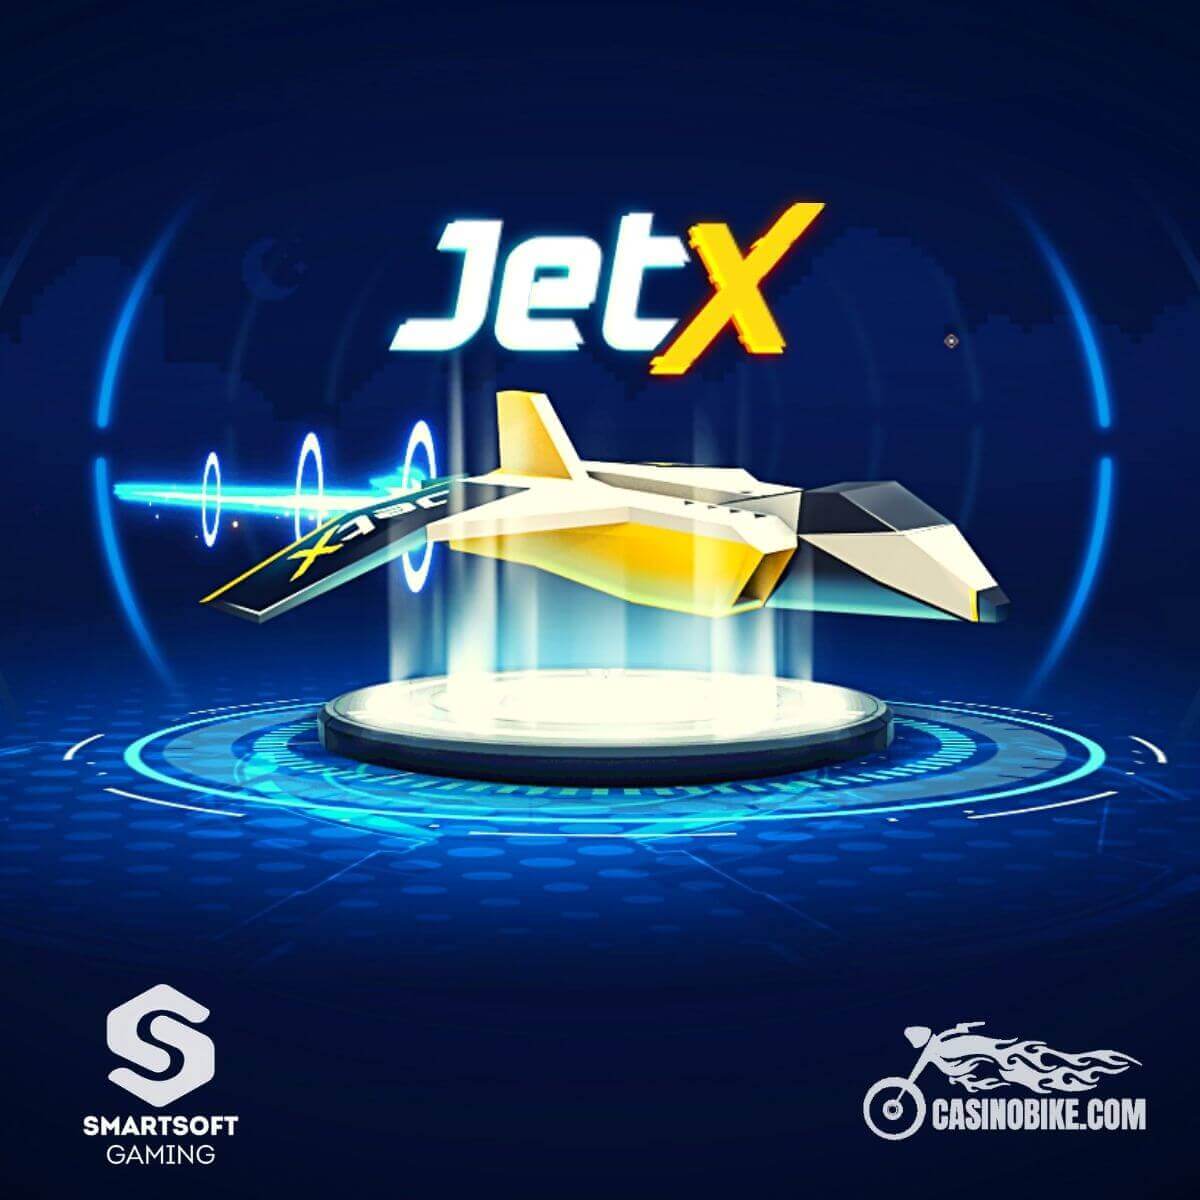 JetX Arcade Casino Game by SmartSoft Gaming